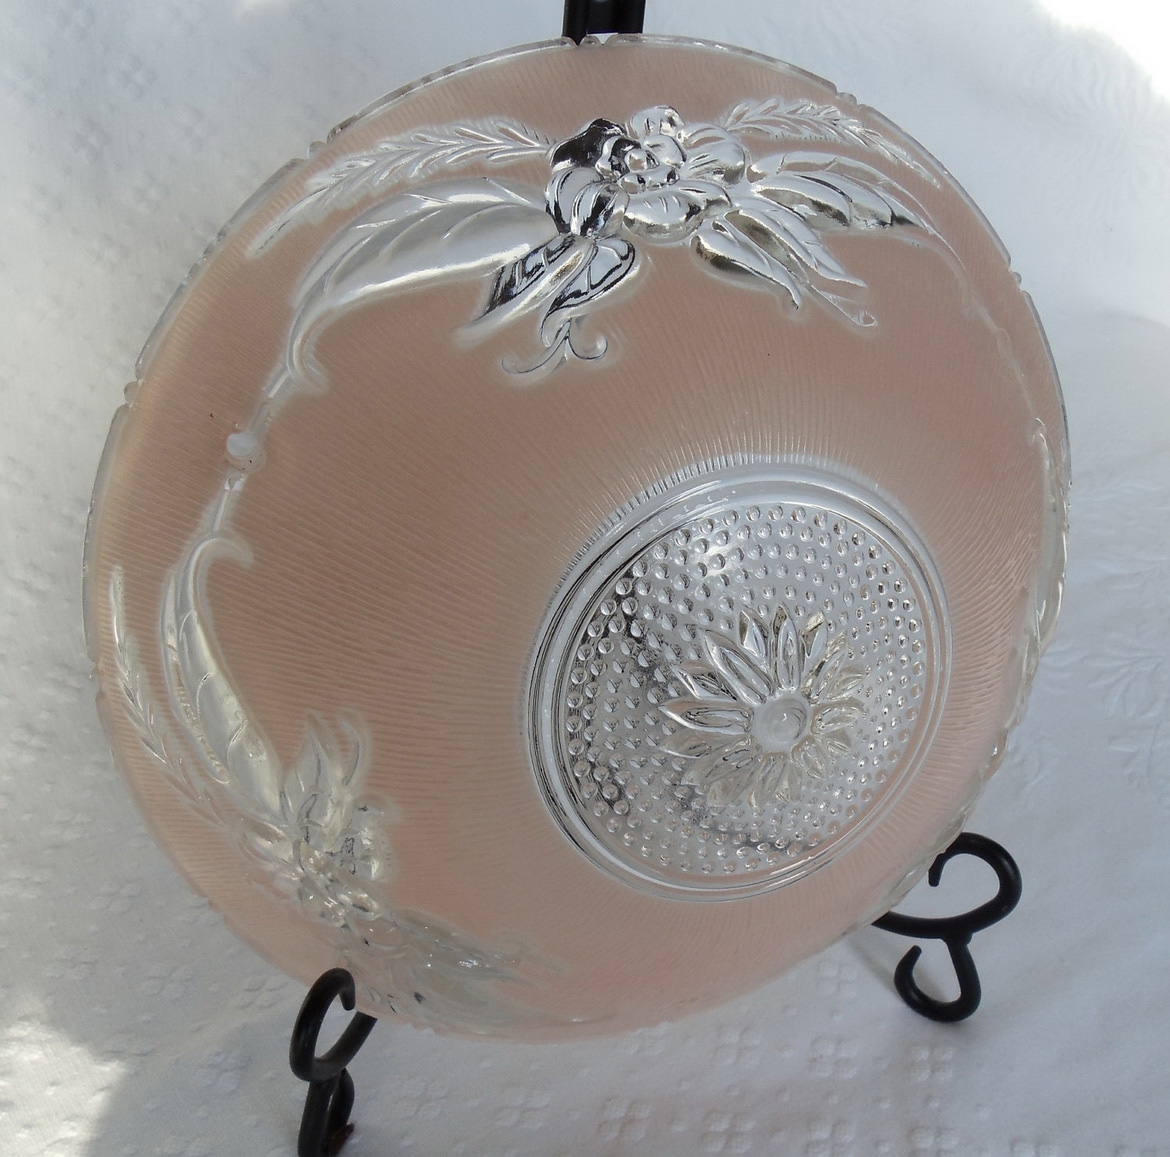 Antique Glass Ceiling Light Coversceiling fan light covers modern home design ideas